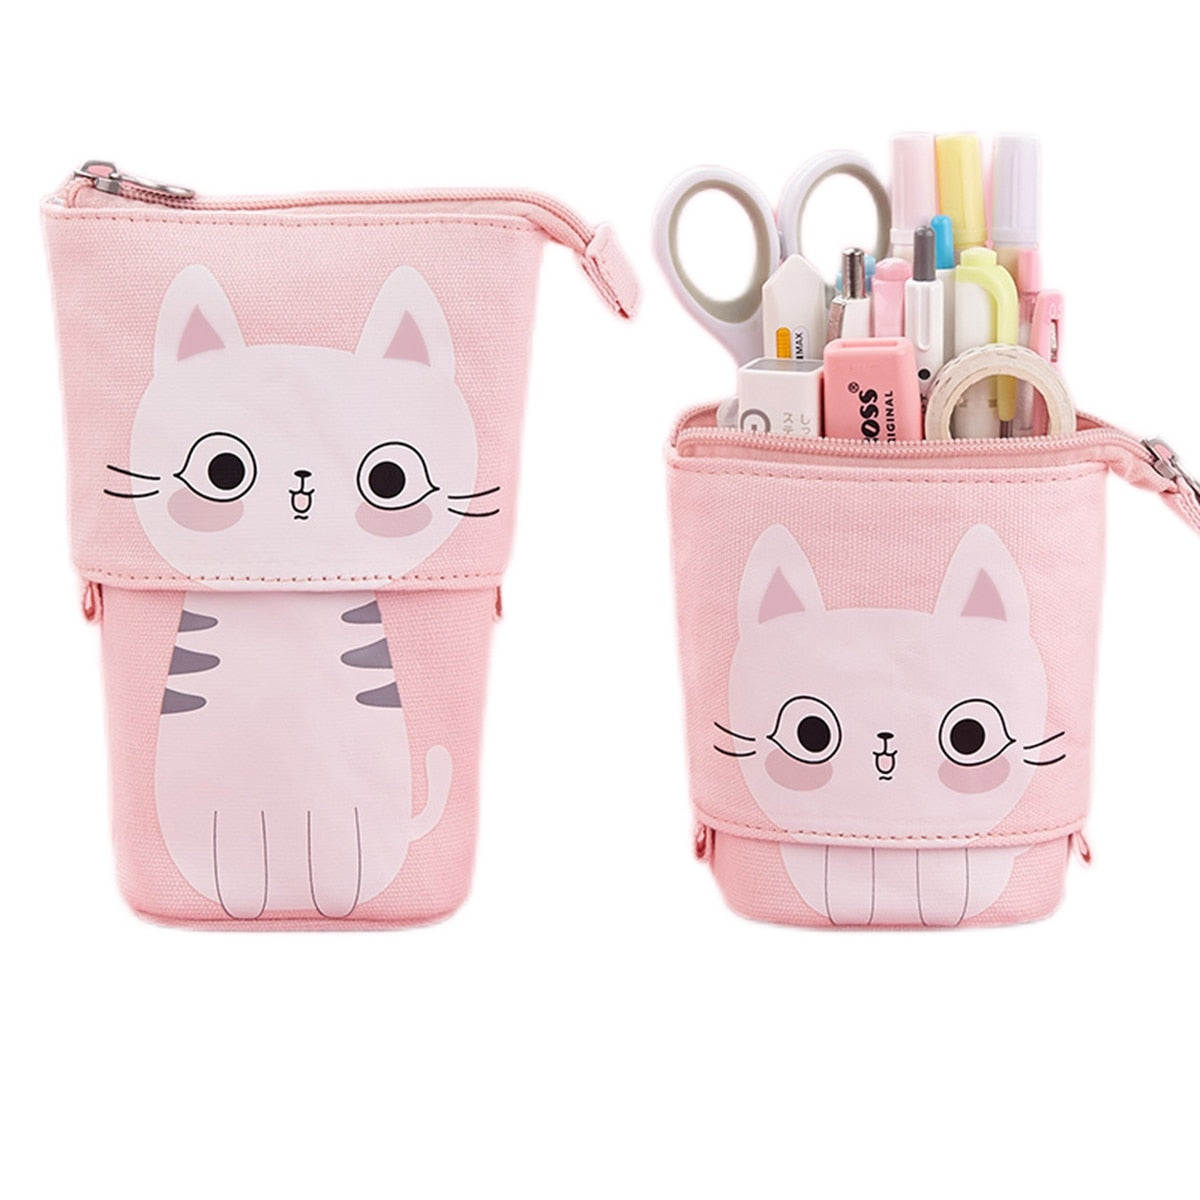 Stationary Cat Purse - Cat purse